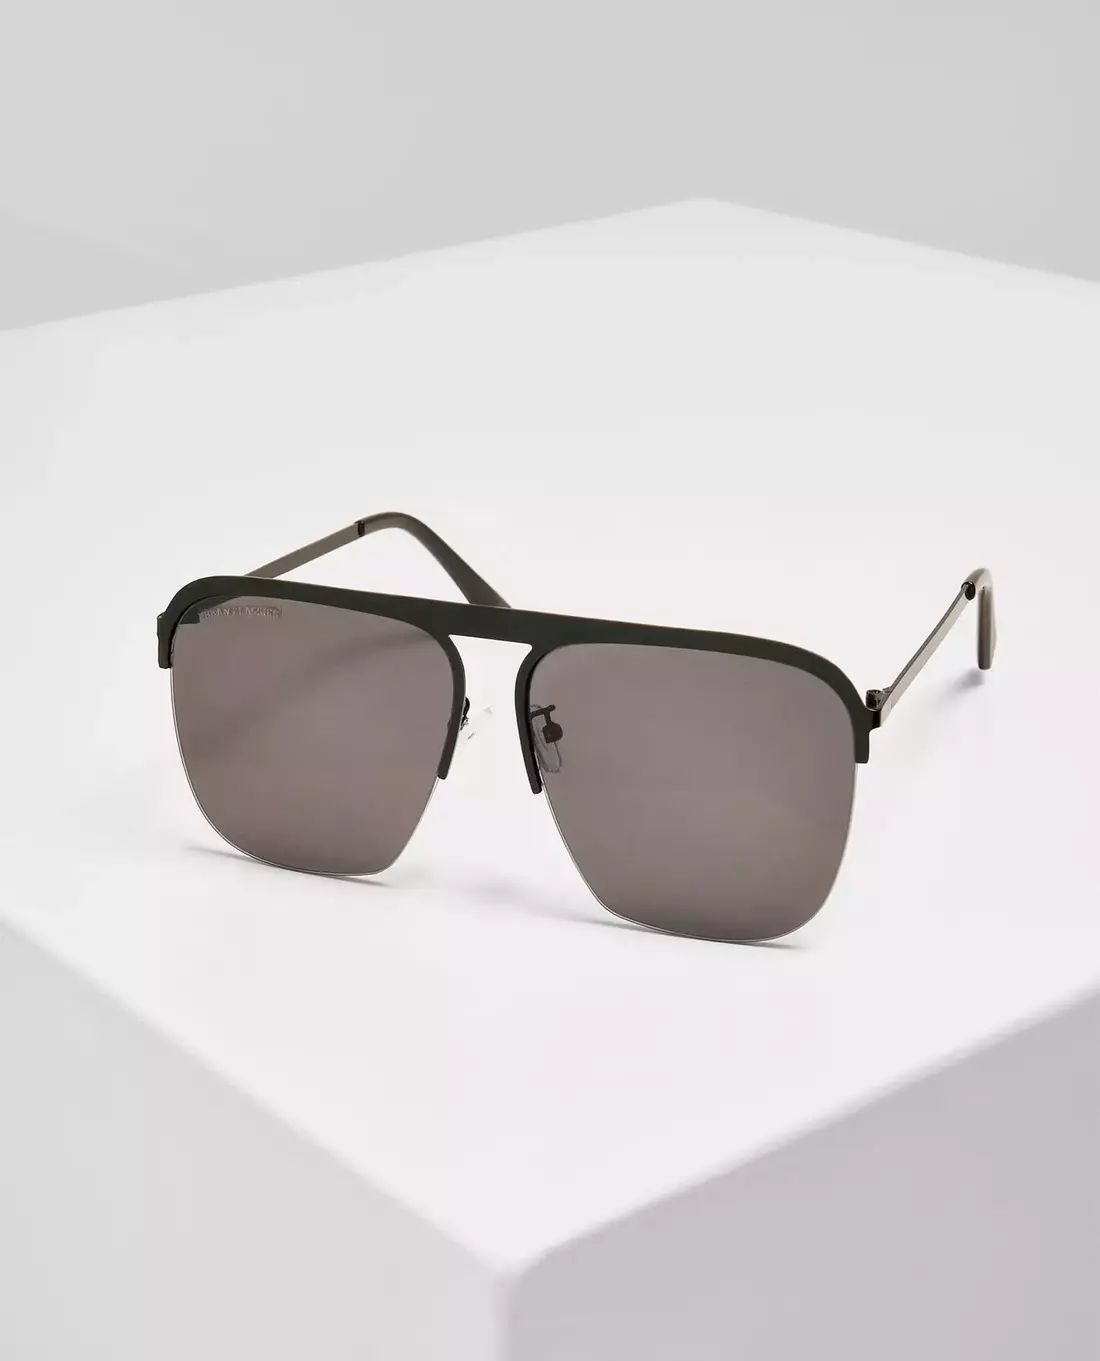 Sunglasses Carl Urban Classics